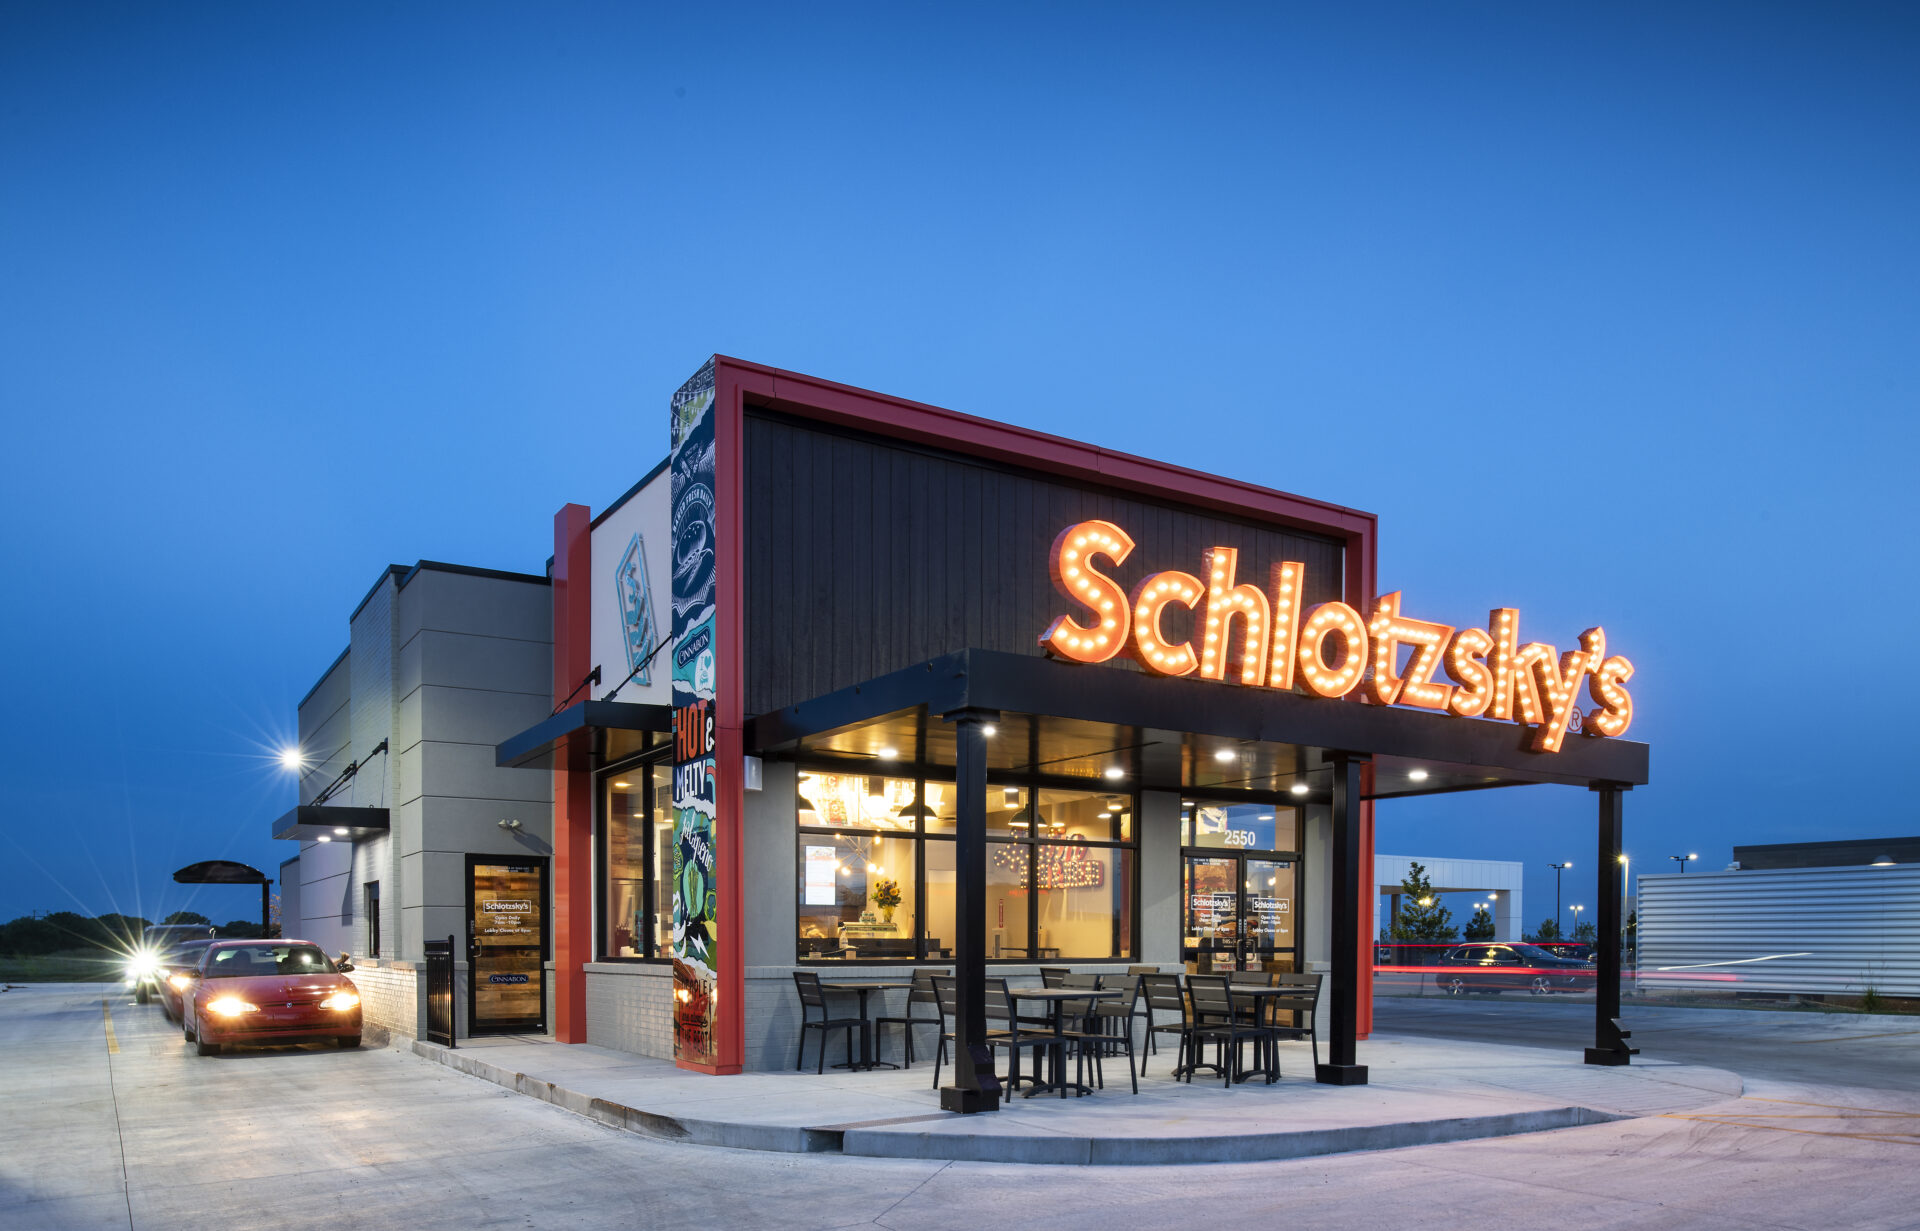 Schlotzsky's exterior store